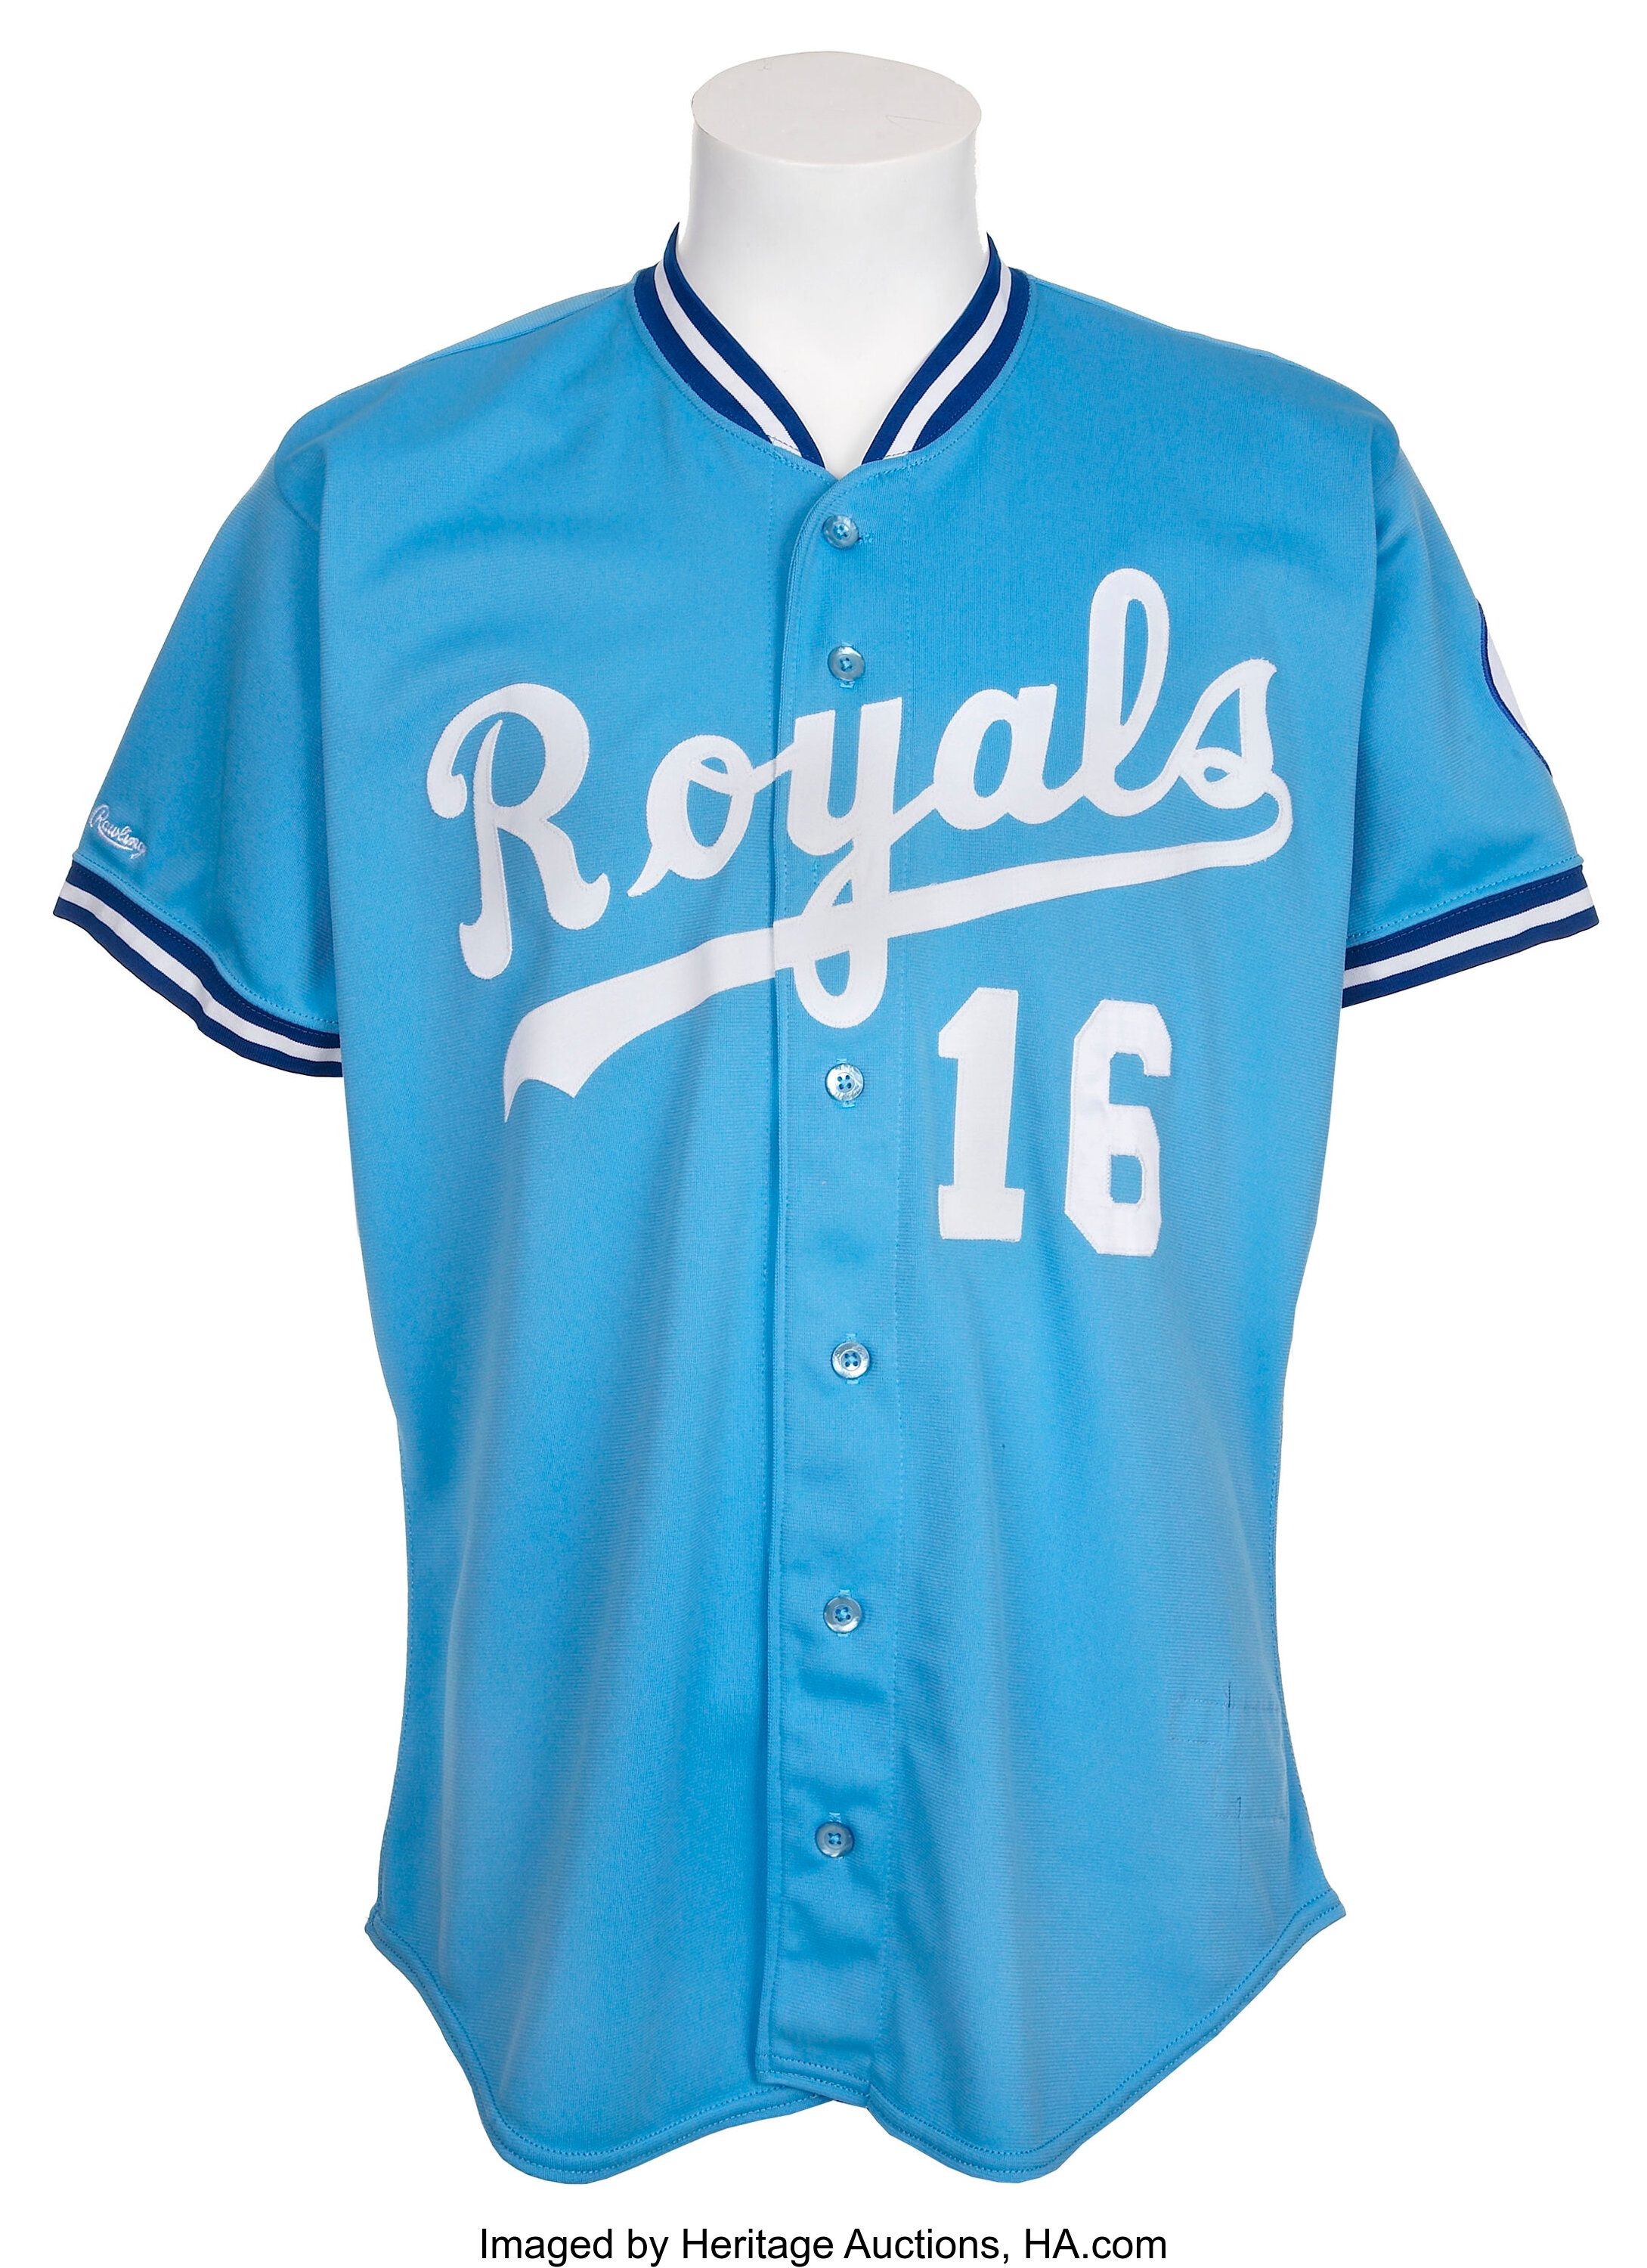 File:1989 Kansas City Royals away uniform.jpg - Wikipedia